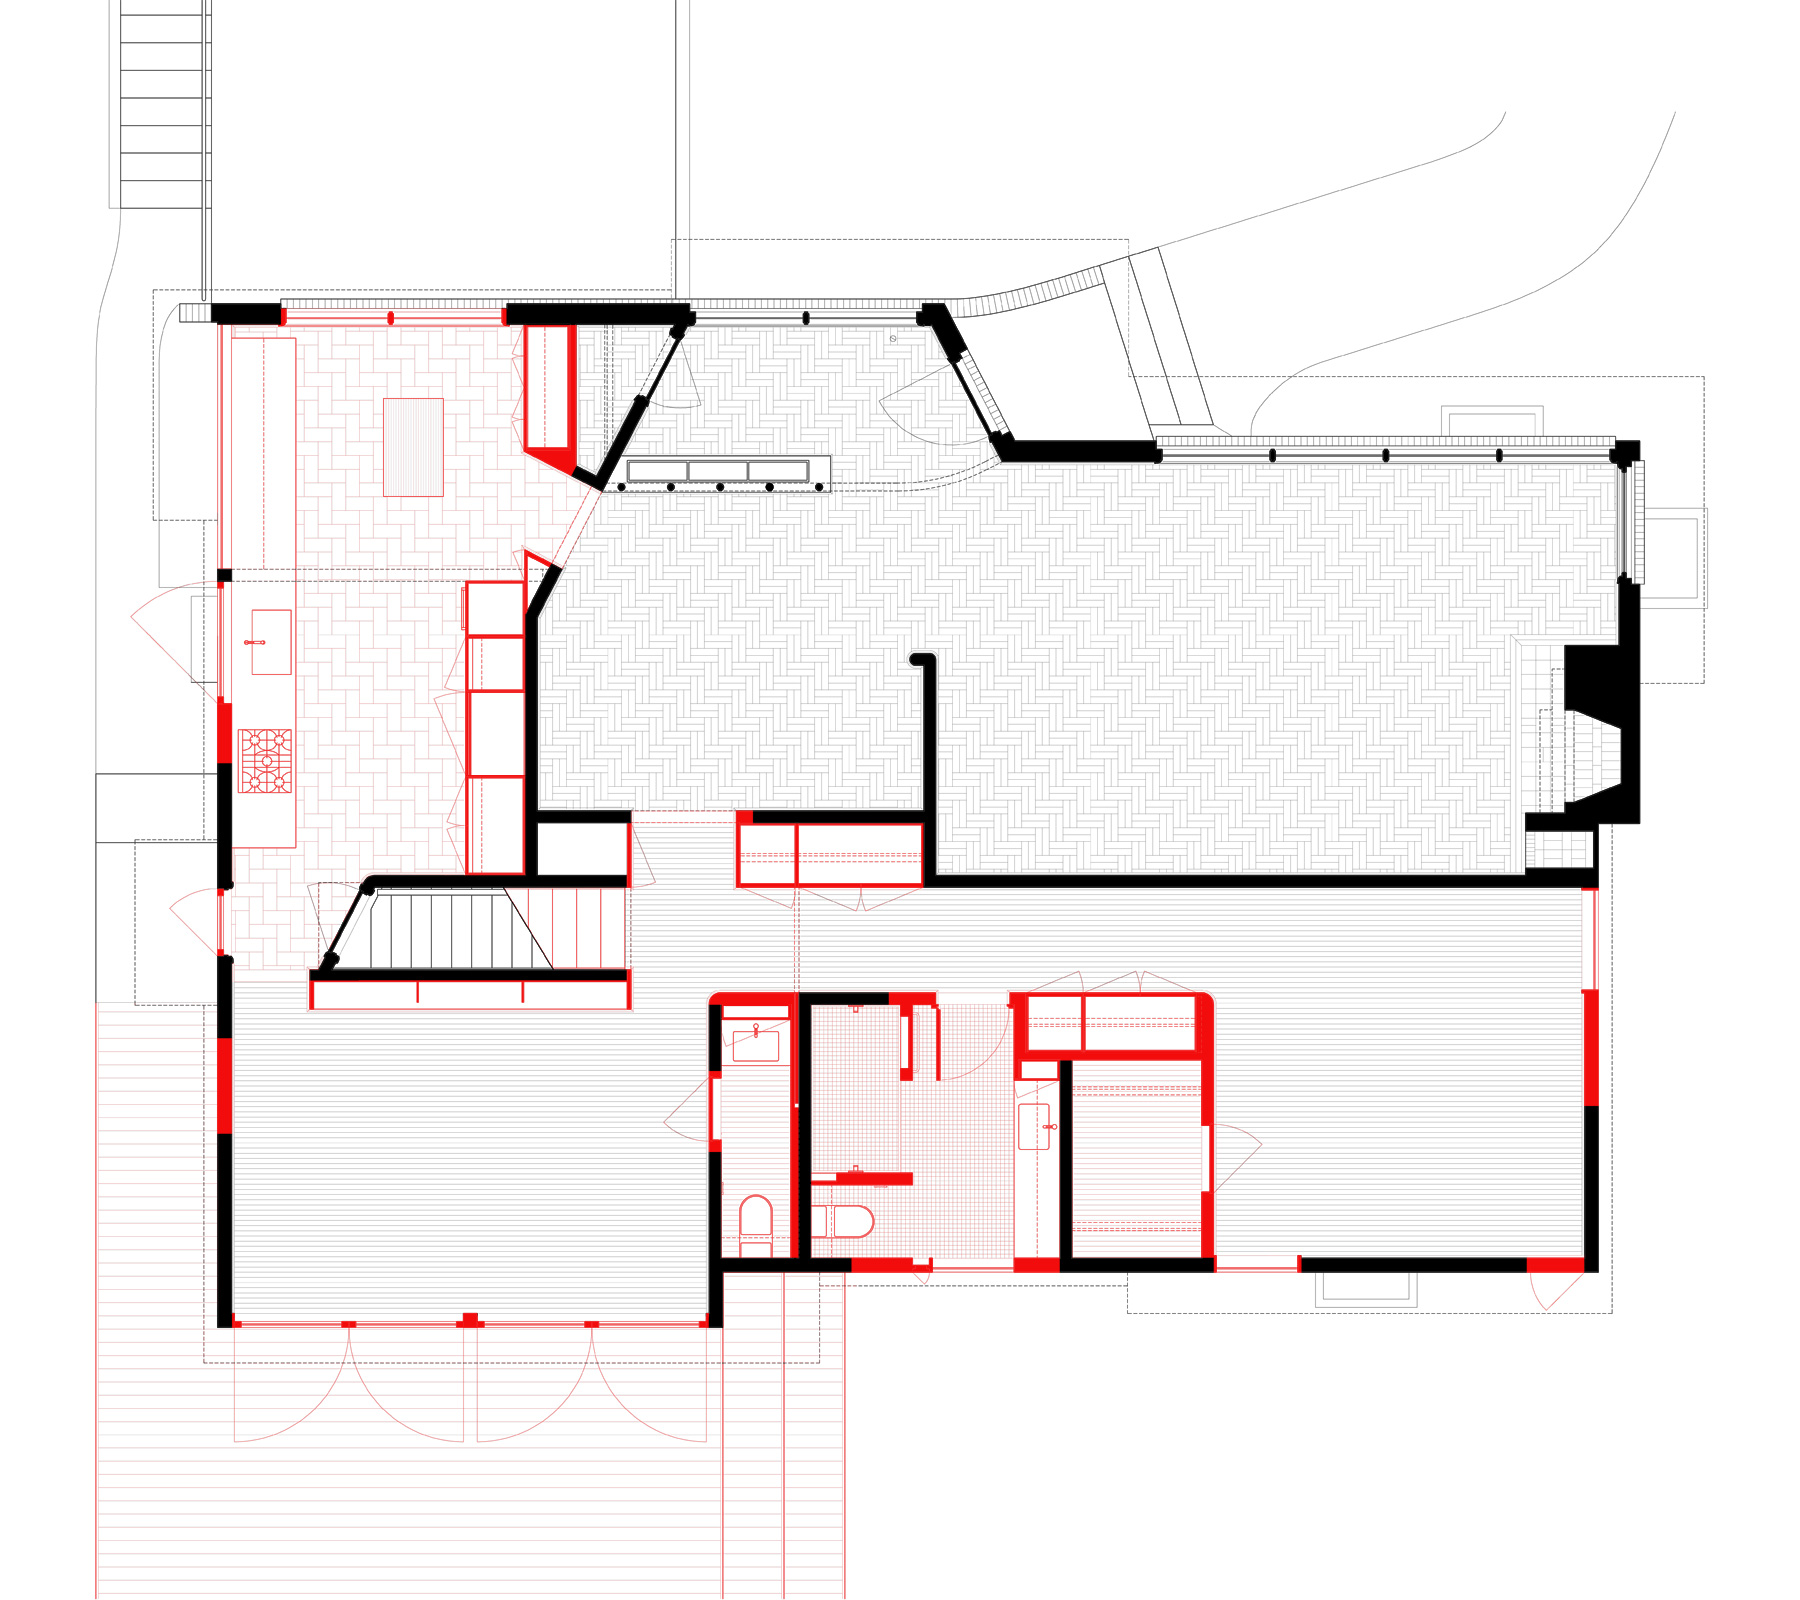 Irvington House. New ground floor plan